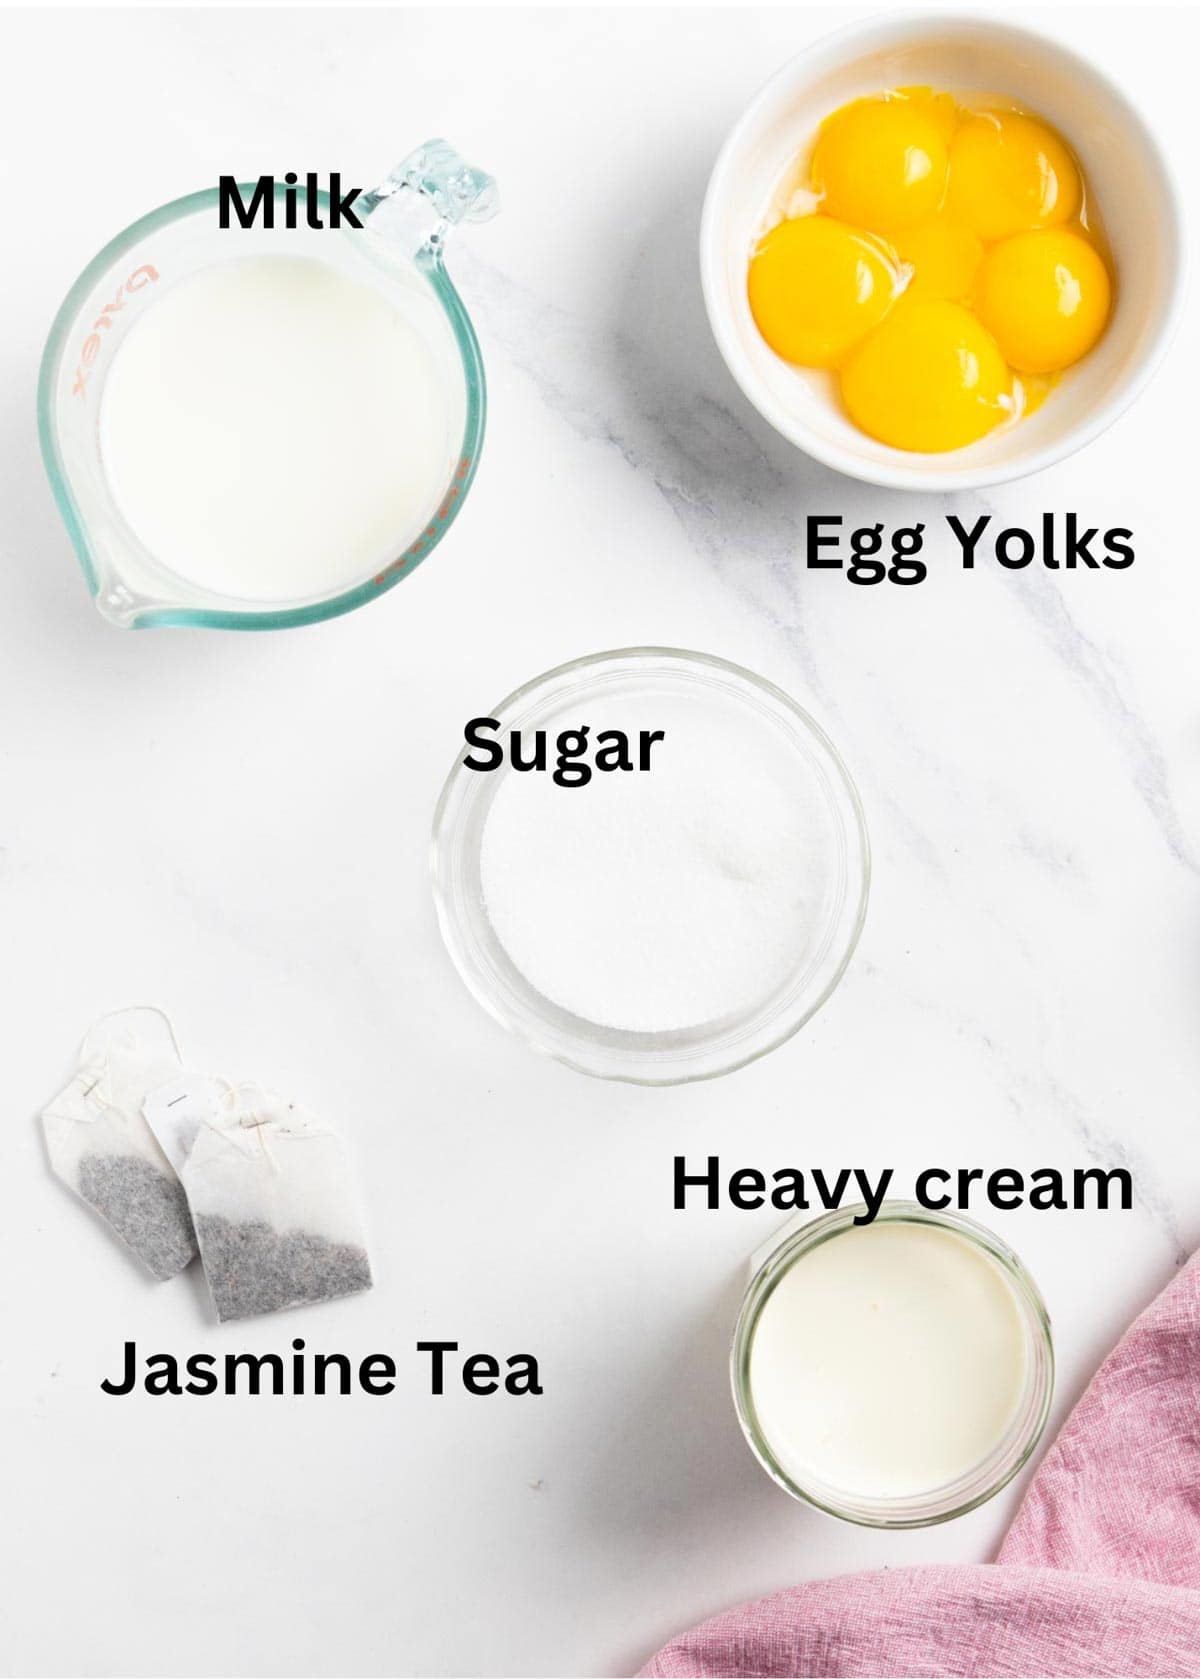 Ingredient labelled on a marble background: egg yolks, milk, heavy cream, sugar, and jasmine tea.